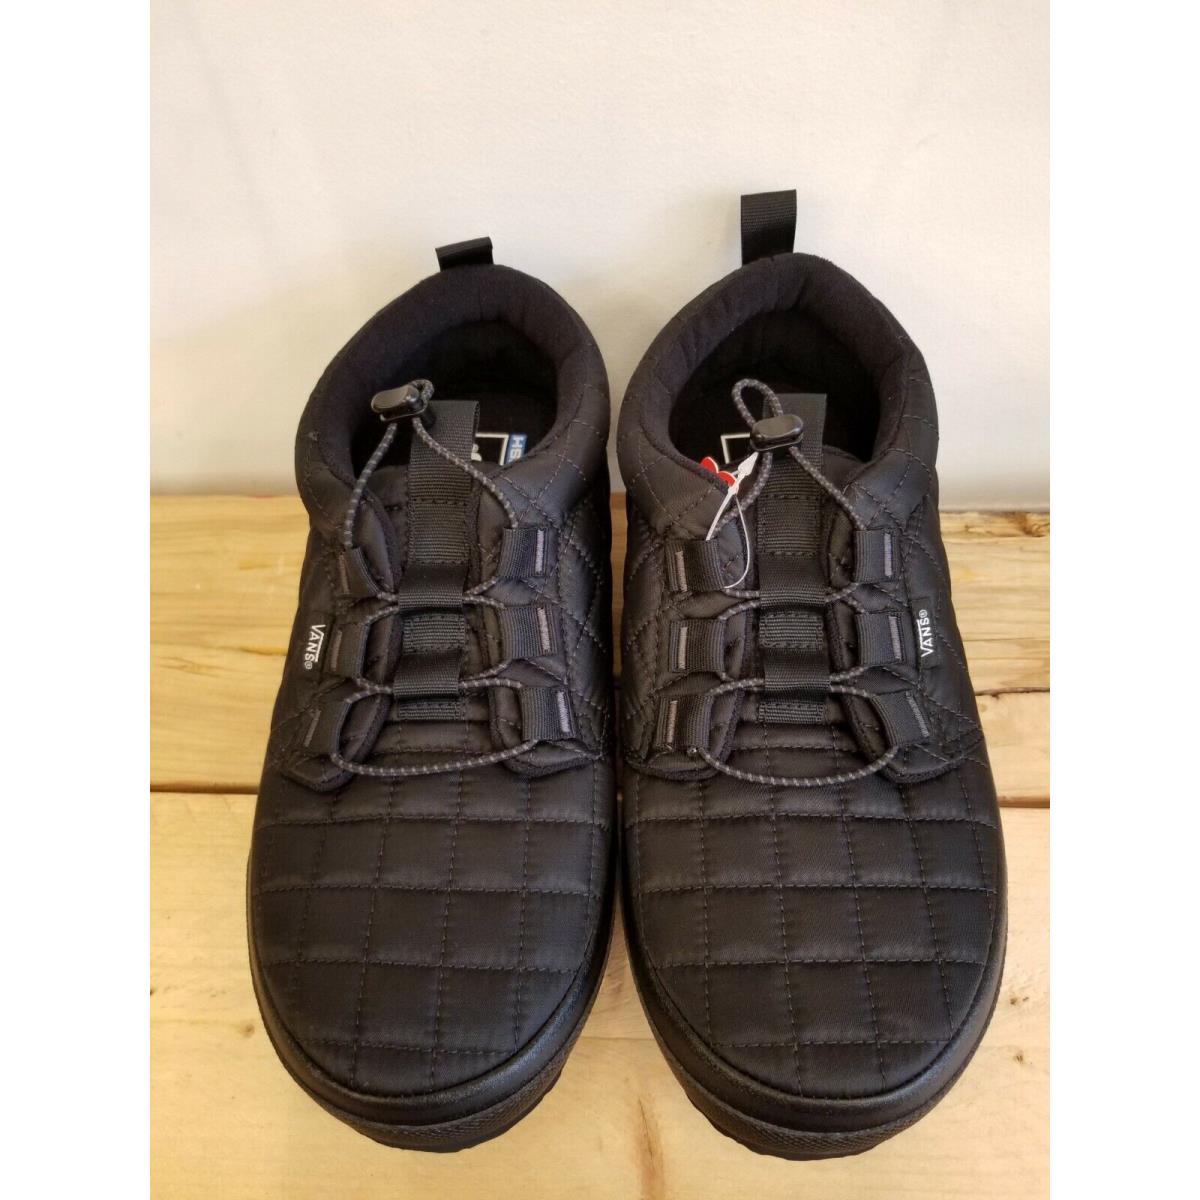 Vans shoes Chukka Ultracush - Black 2